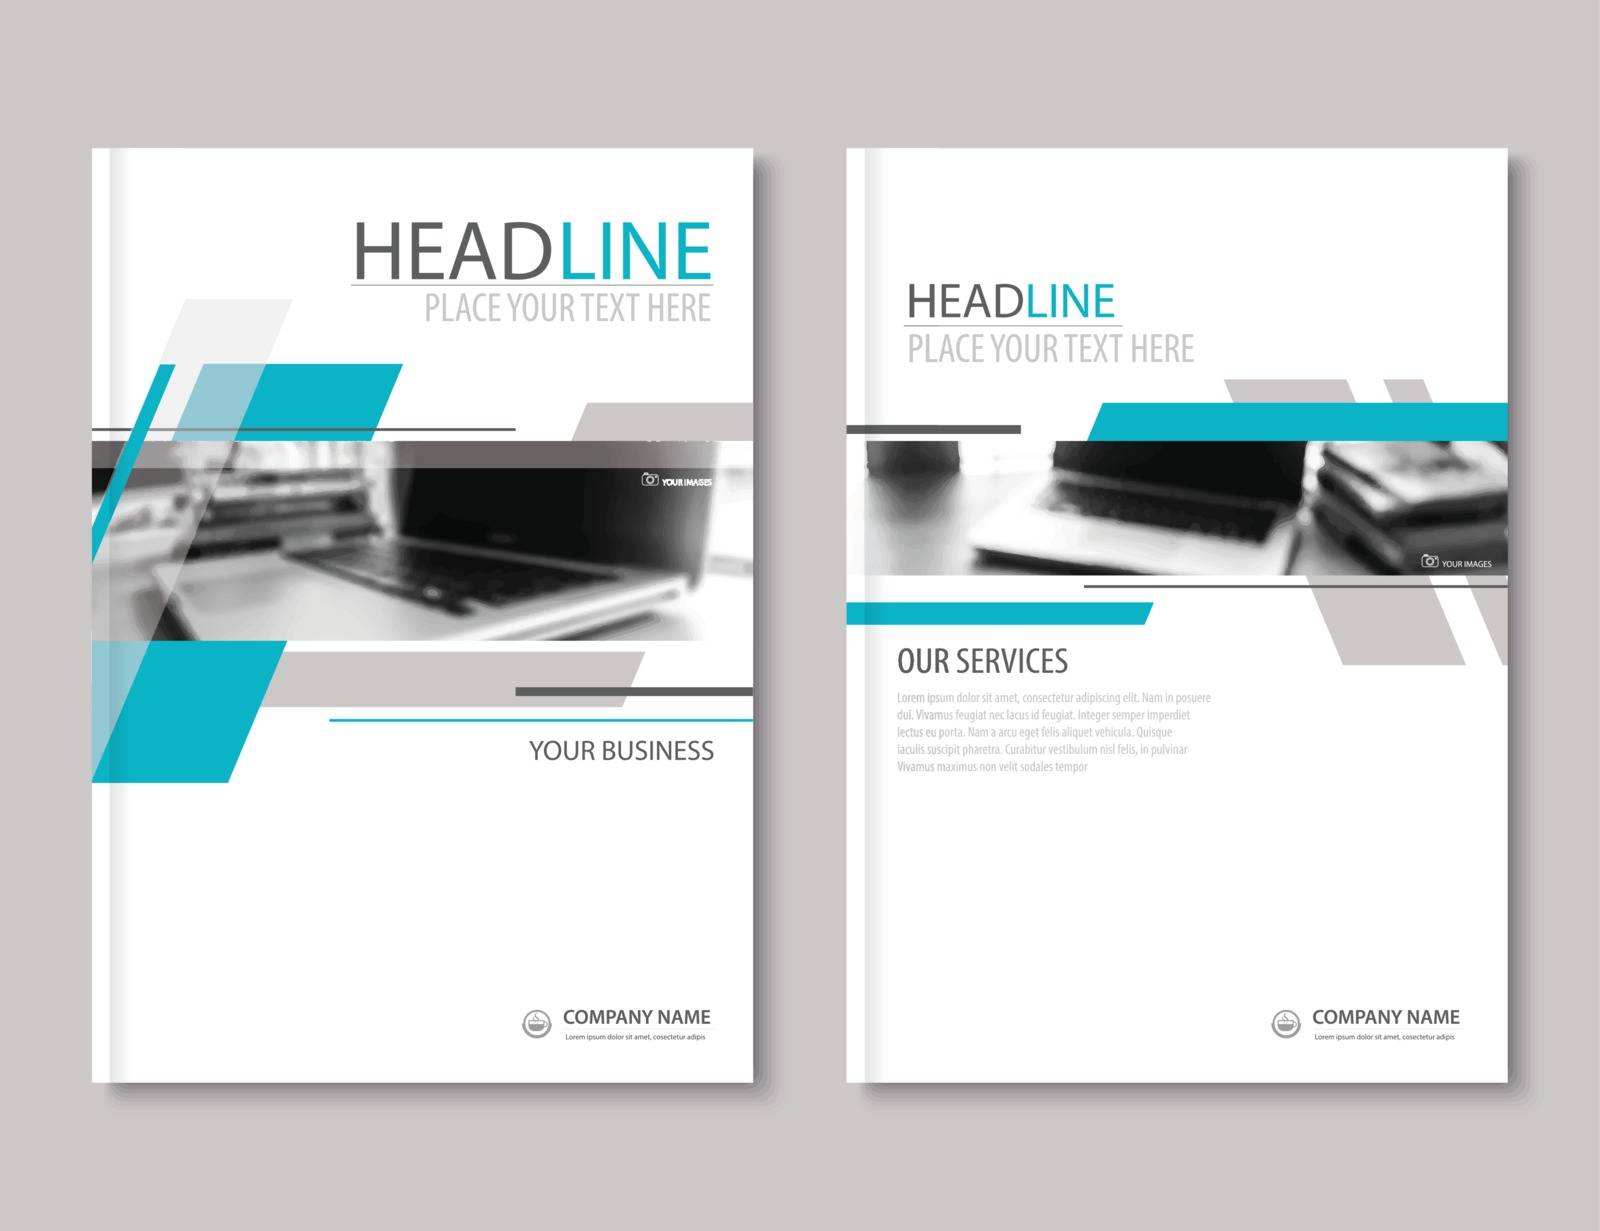 Annual report brochure flyer design template. Company profile business headline.Leaflet cover presentation flat background.